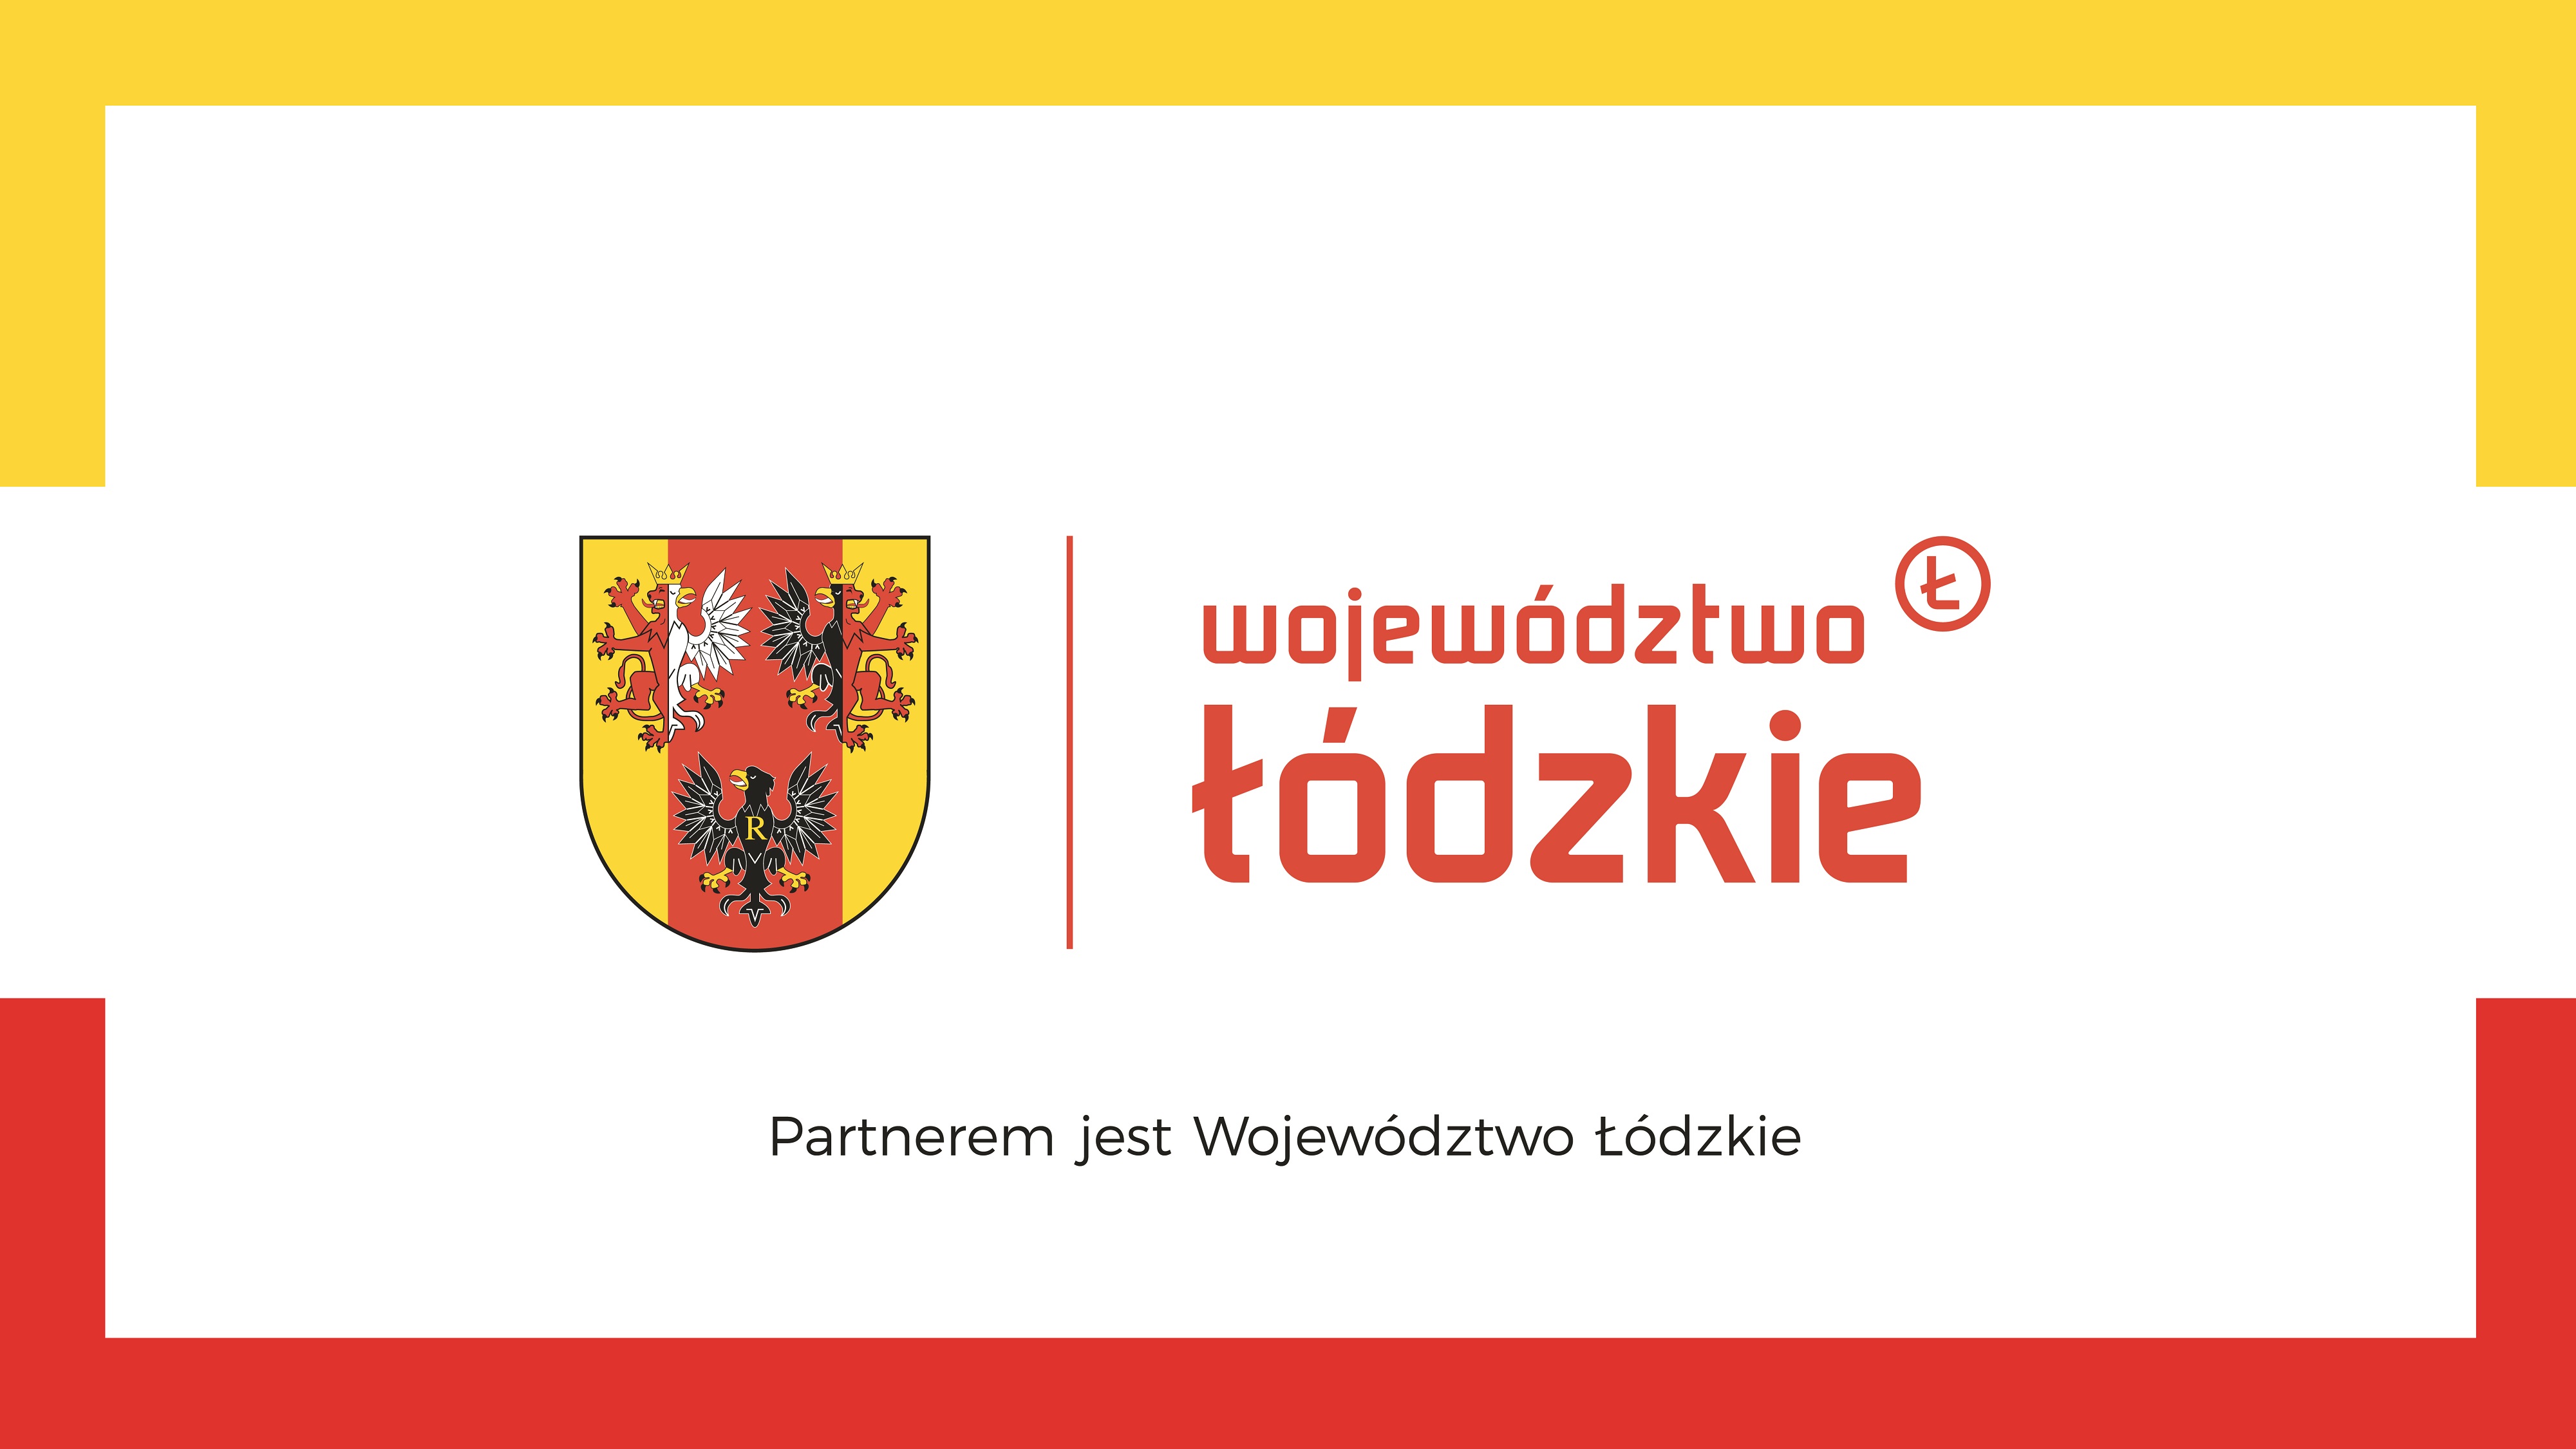 The publication's partner is the Łódź Voivodeship